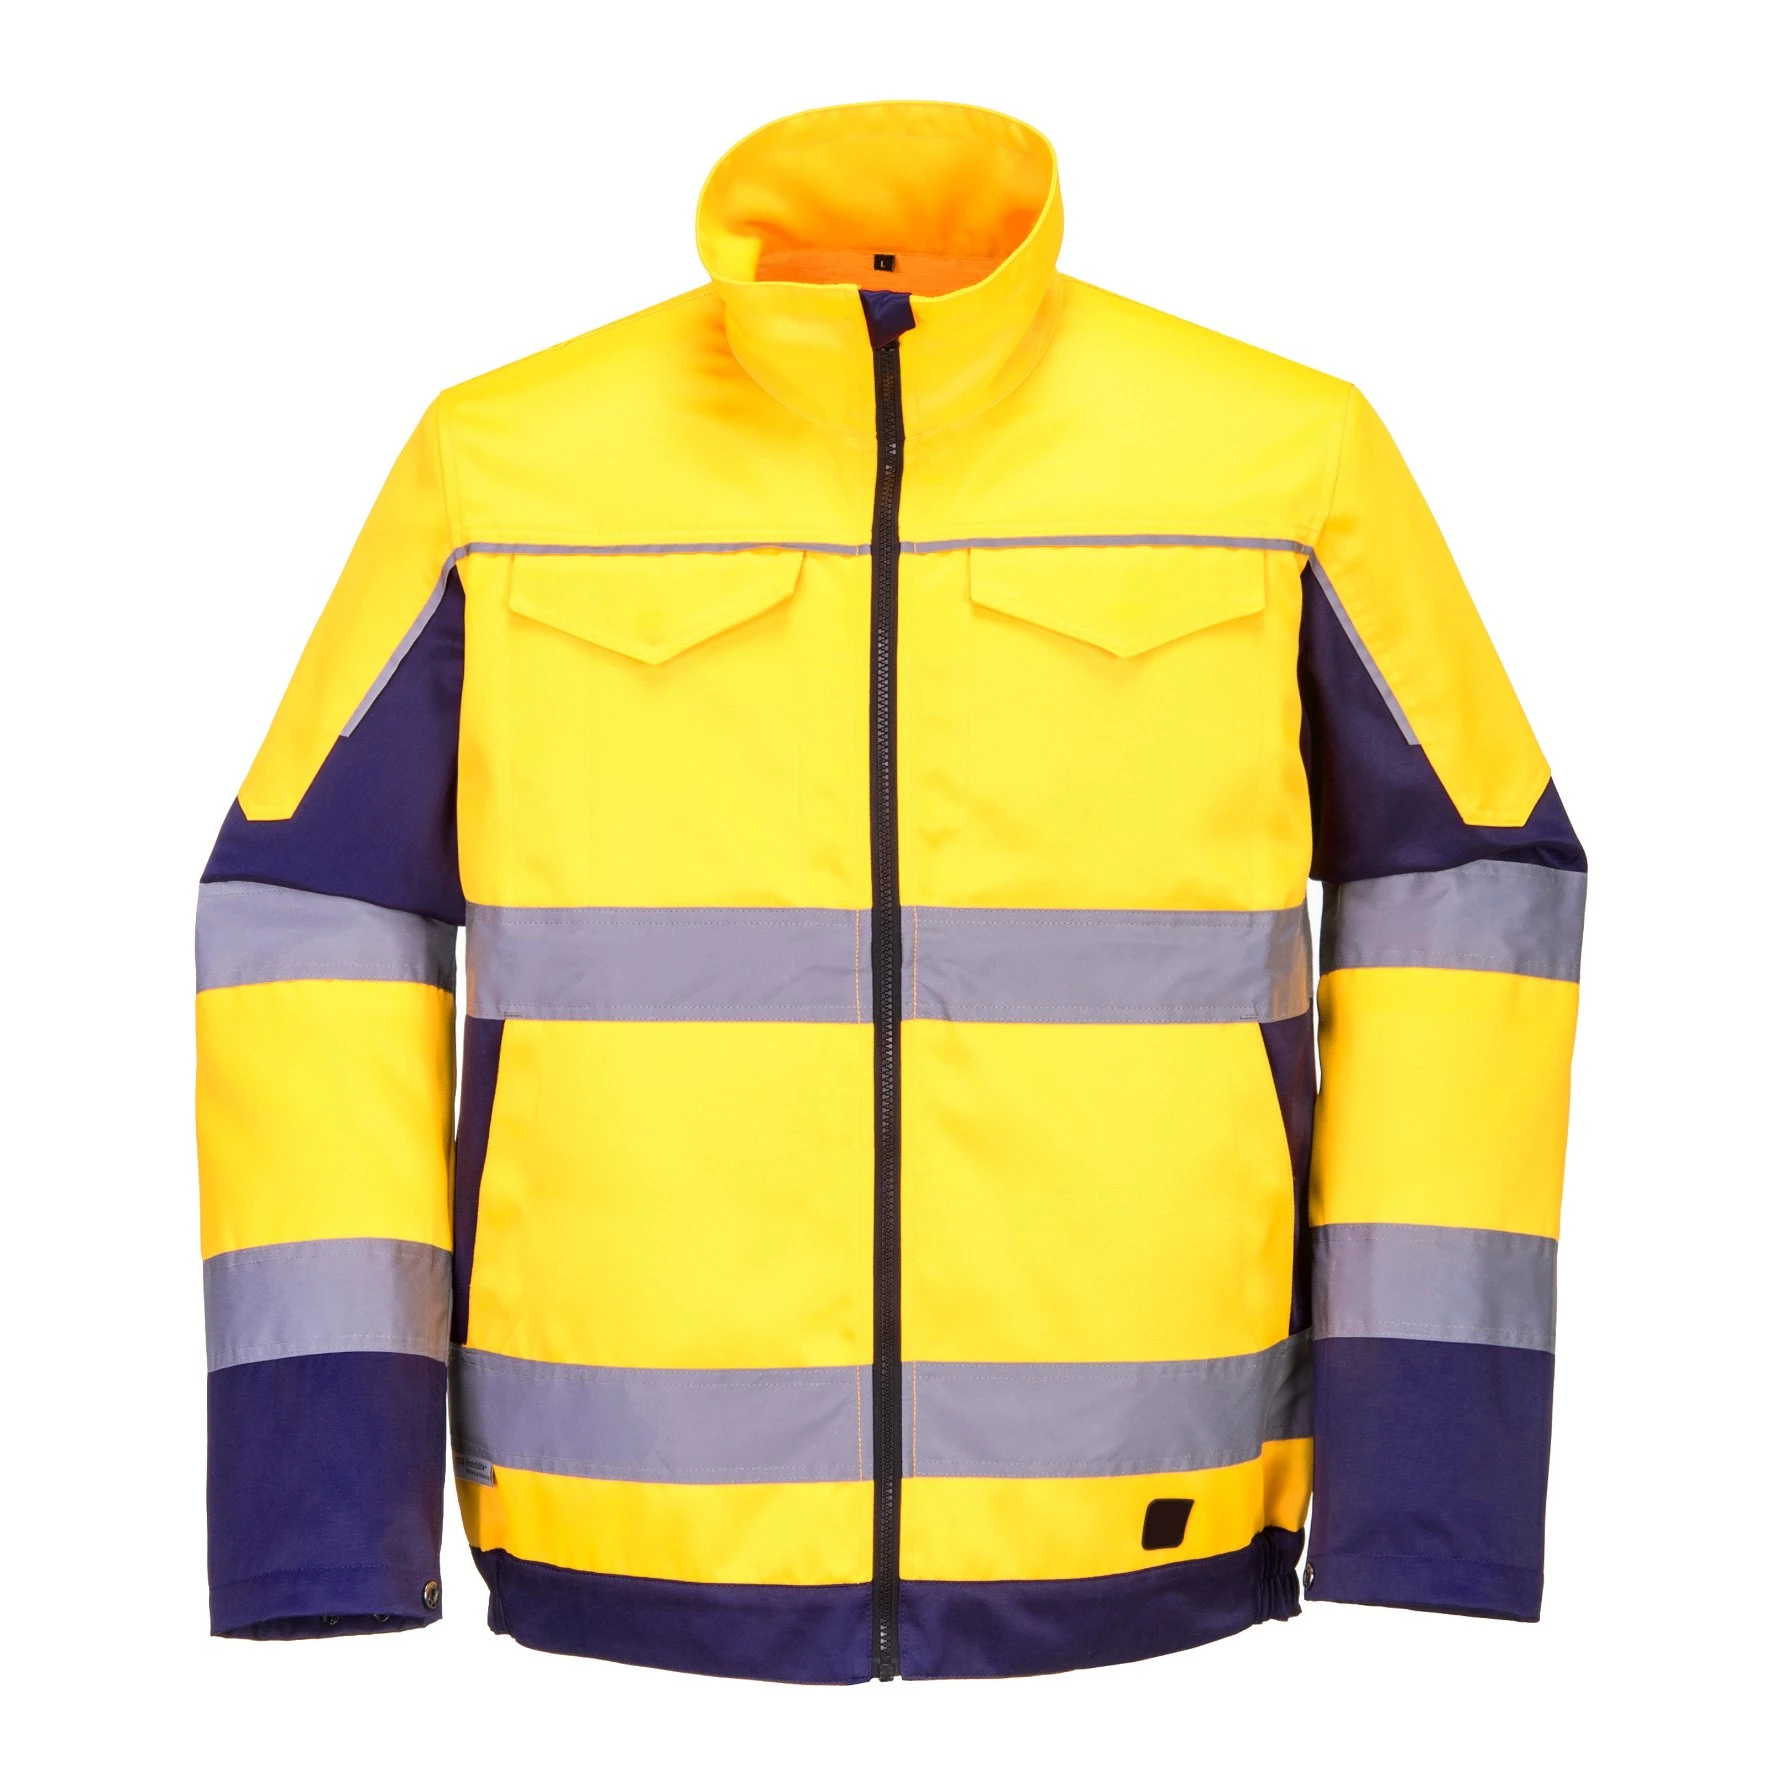 Safety Reflective Construction Jacket